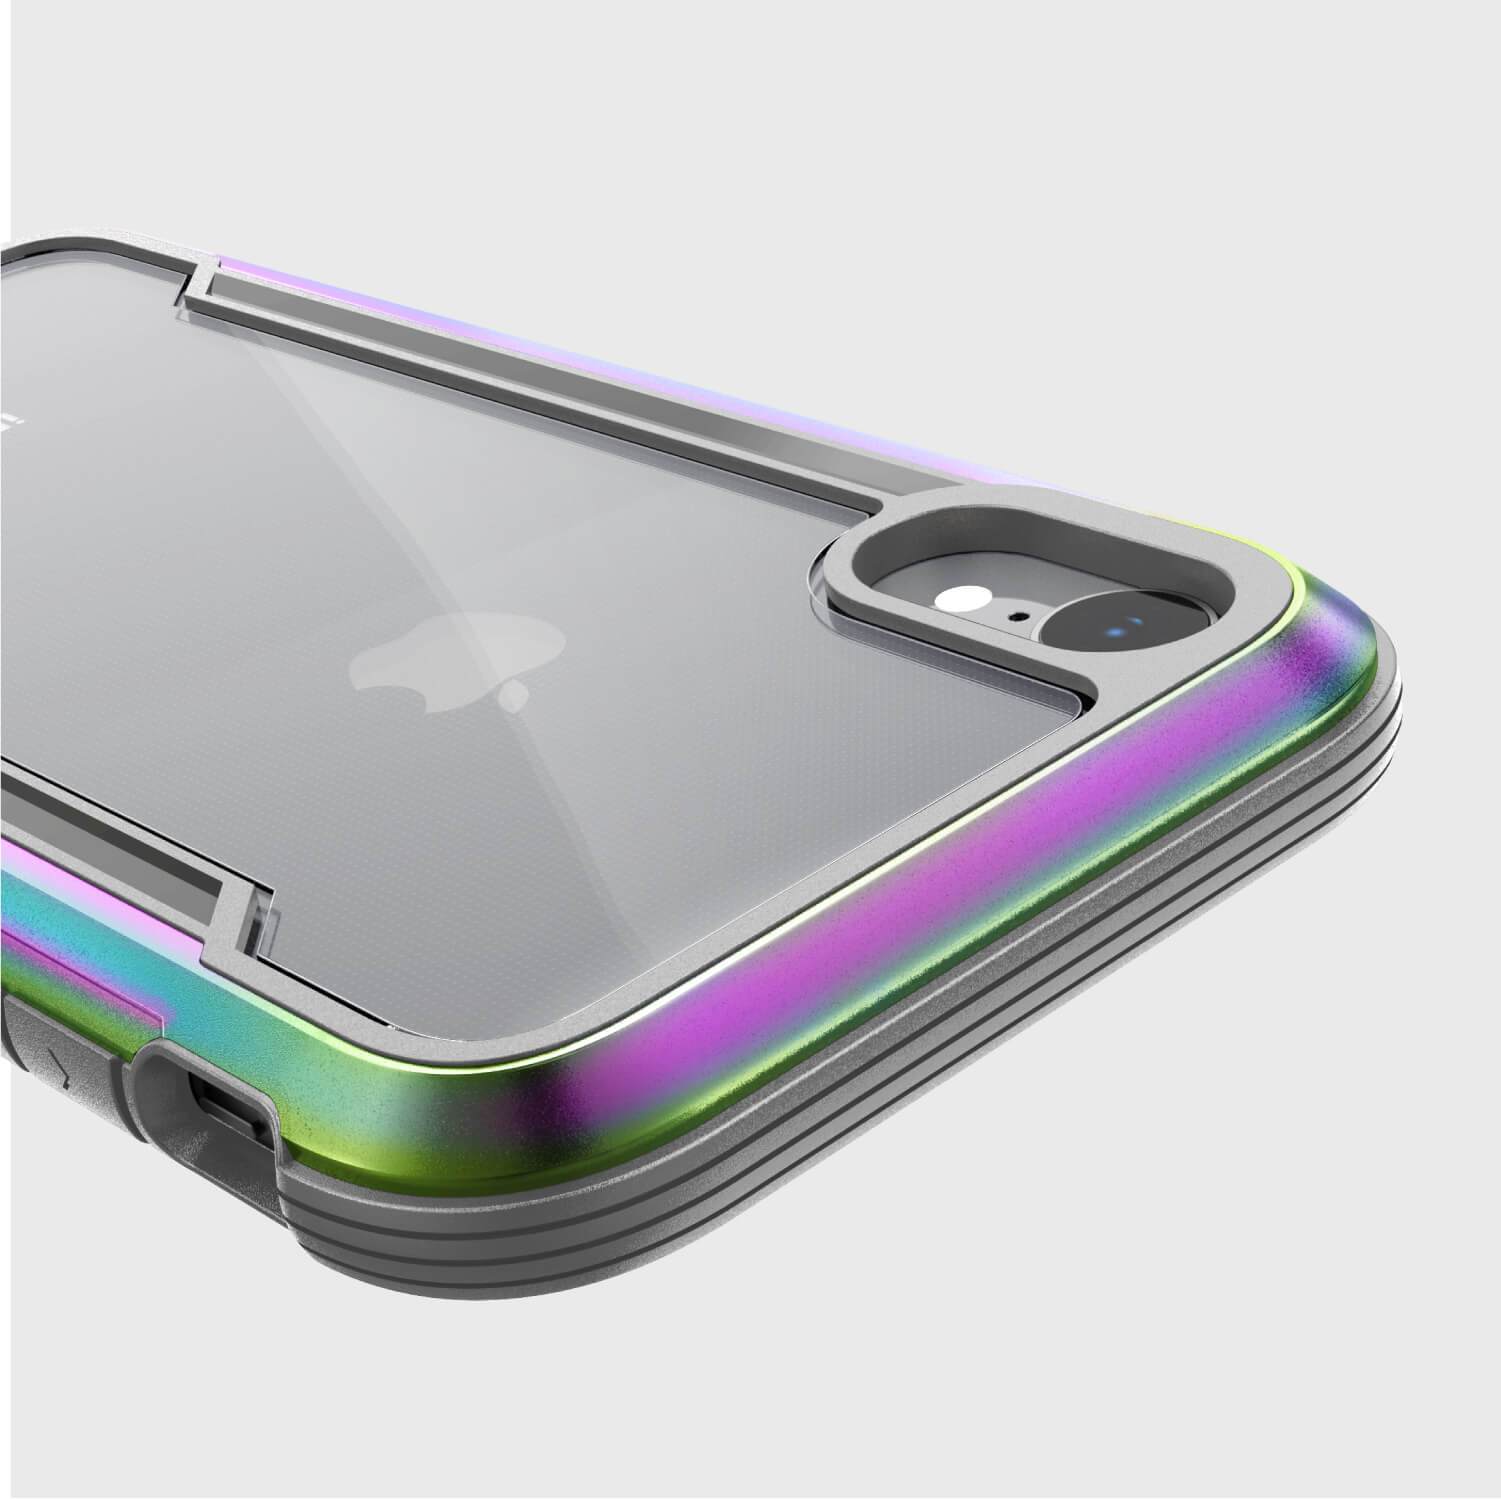 iPhone XR Case - SHIELD